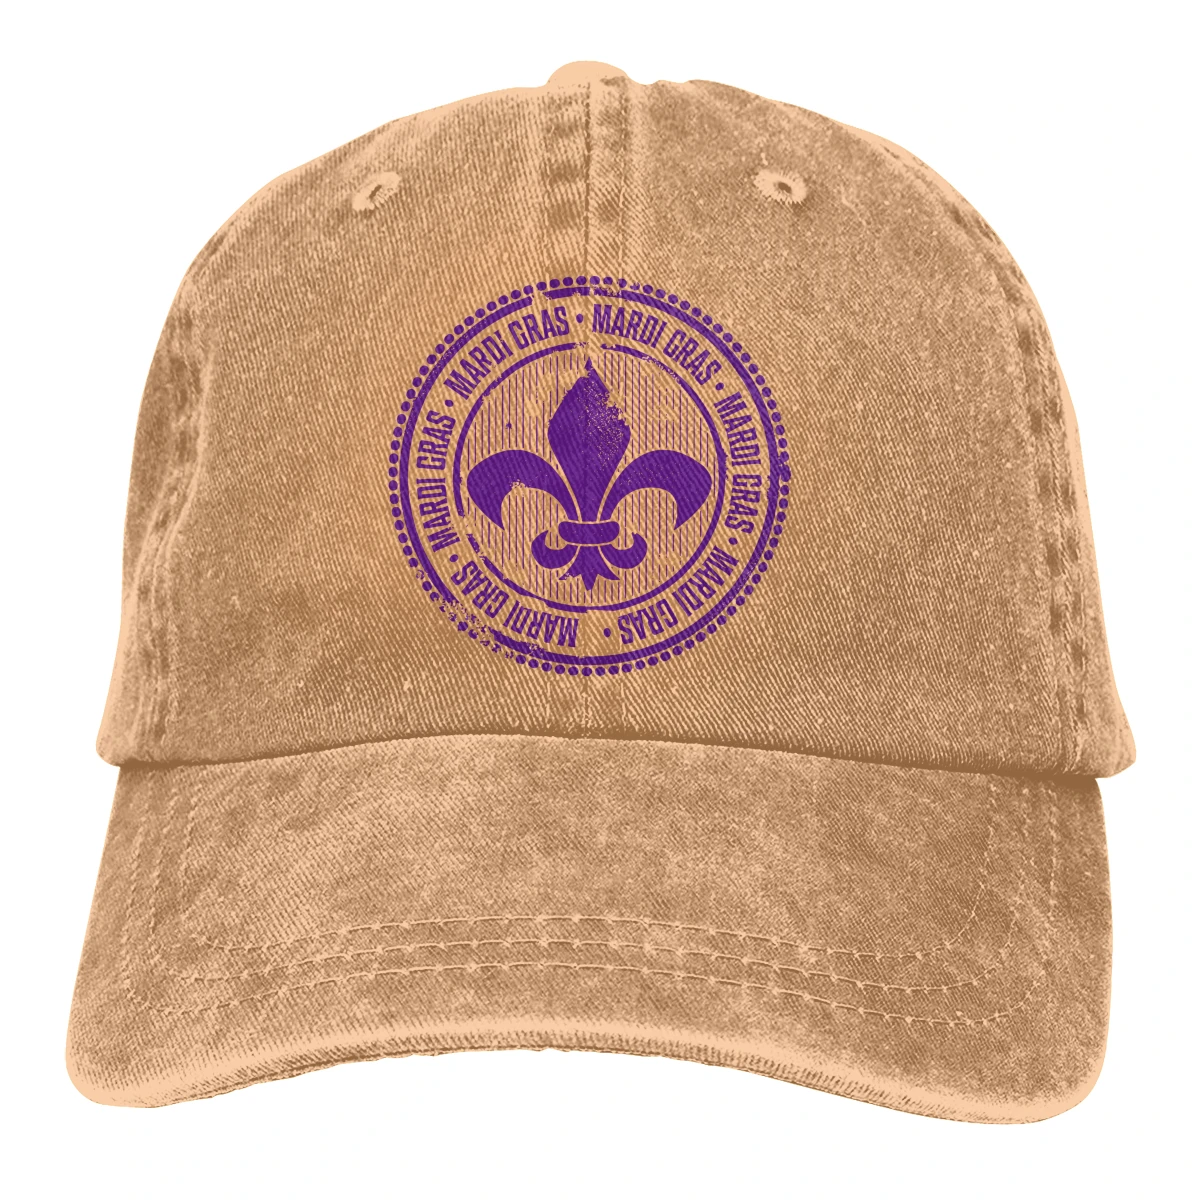 

Baseball Cap Men's Adjustable Cap Purple Mardi Gras Celebration Stamp Casual leisure hats Fashion Snapback Summer Fall hat